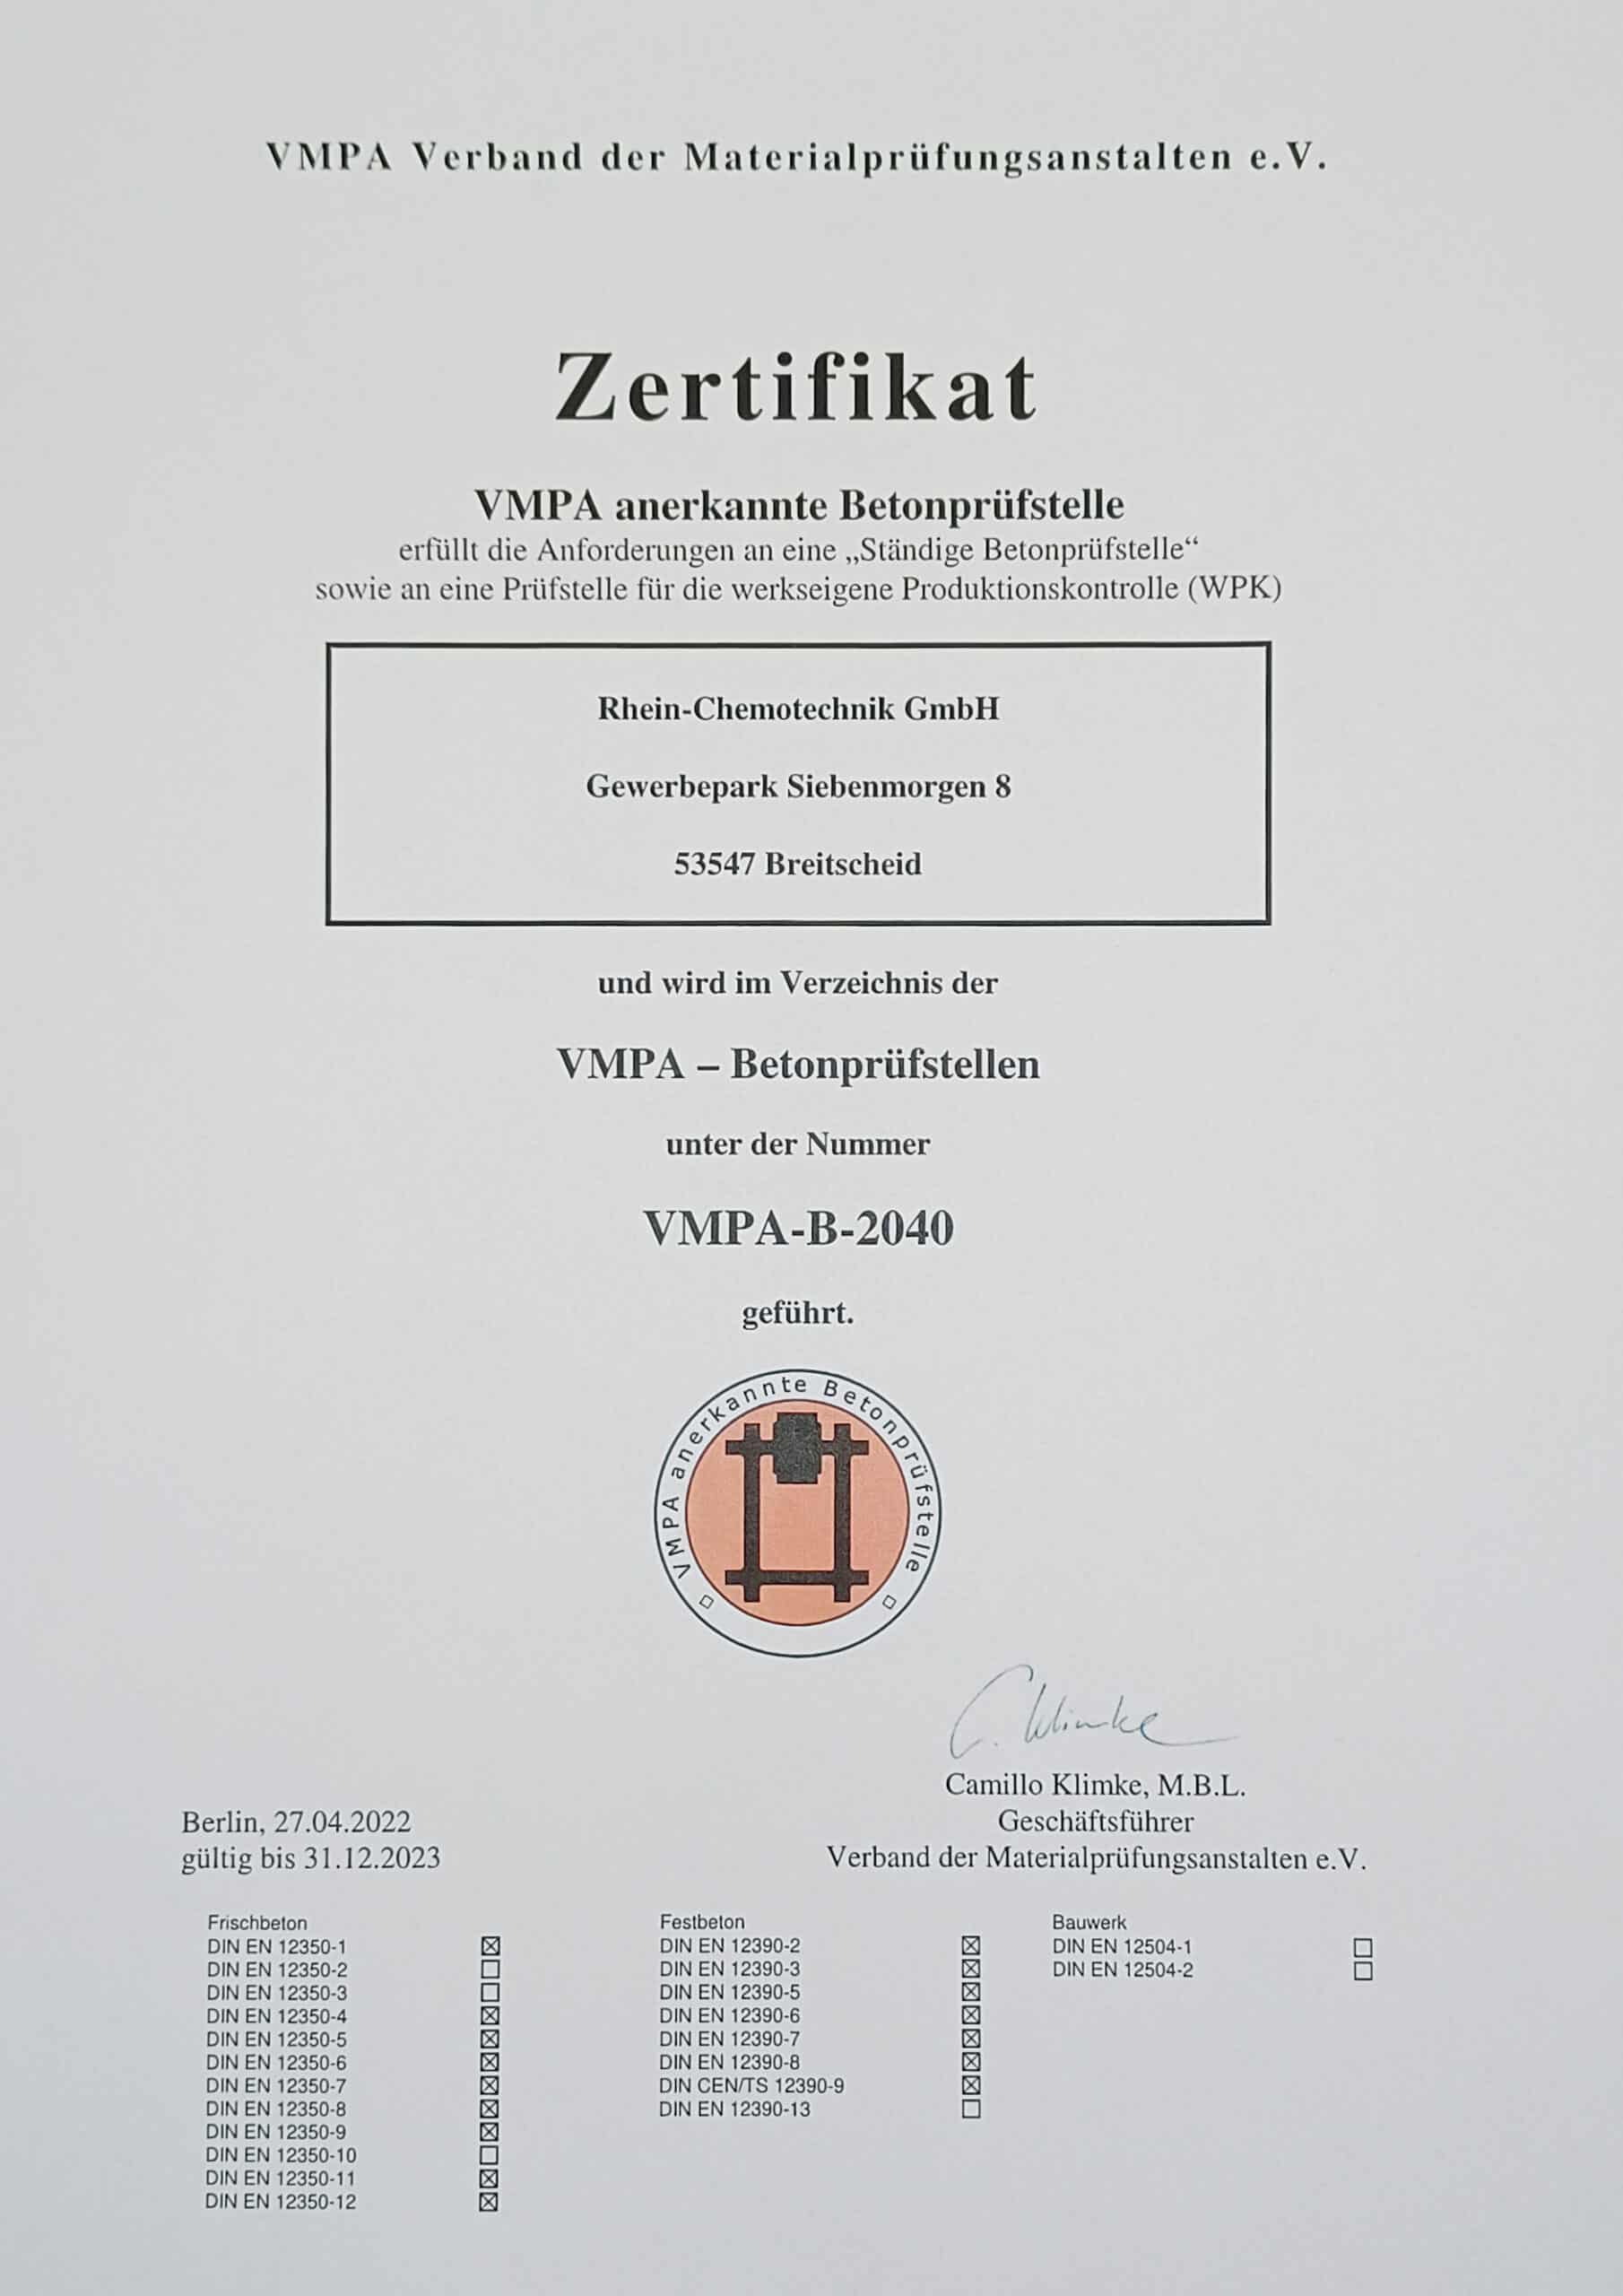 Zertifikat VMPA anerkannte Betonprüfstelle Rhein-Chemotechnik GmbH_Betonlabor